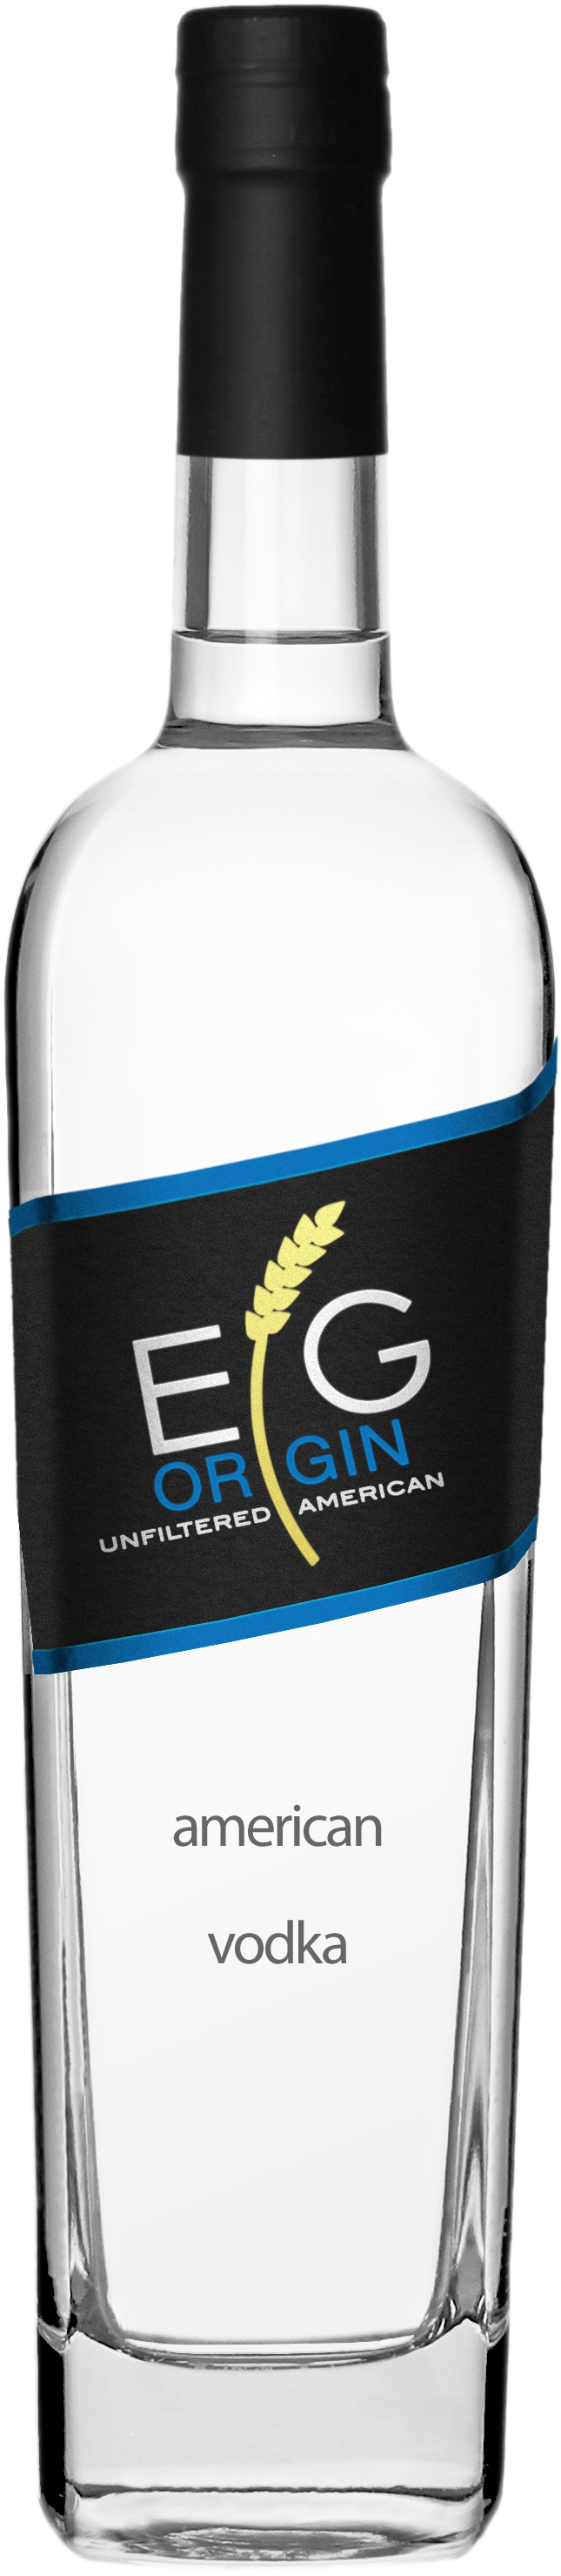 EG Origin Unfiltered American Vodka